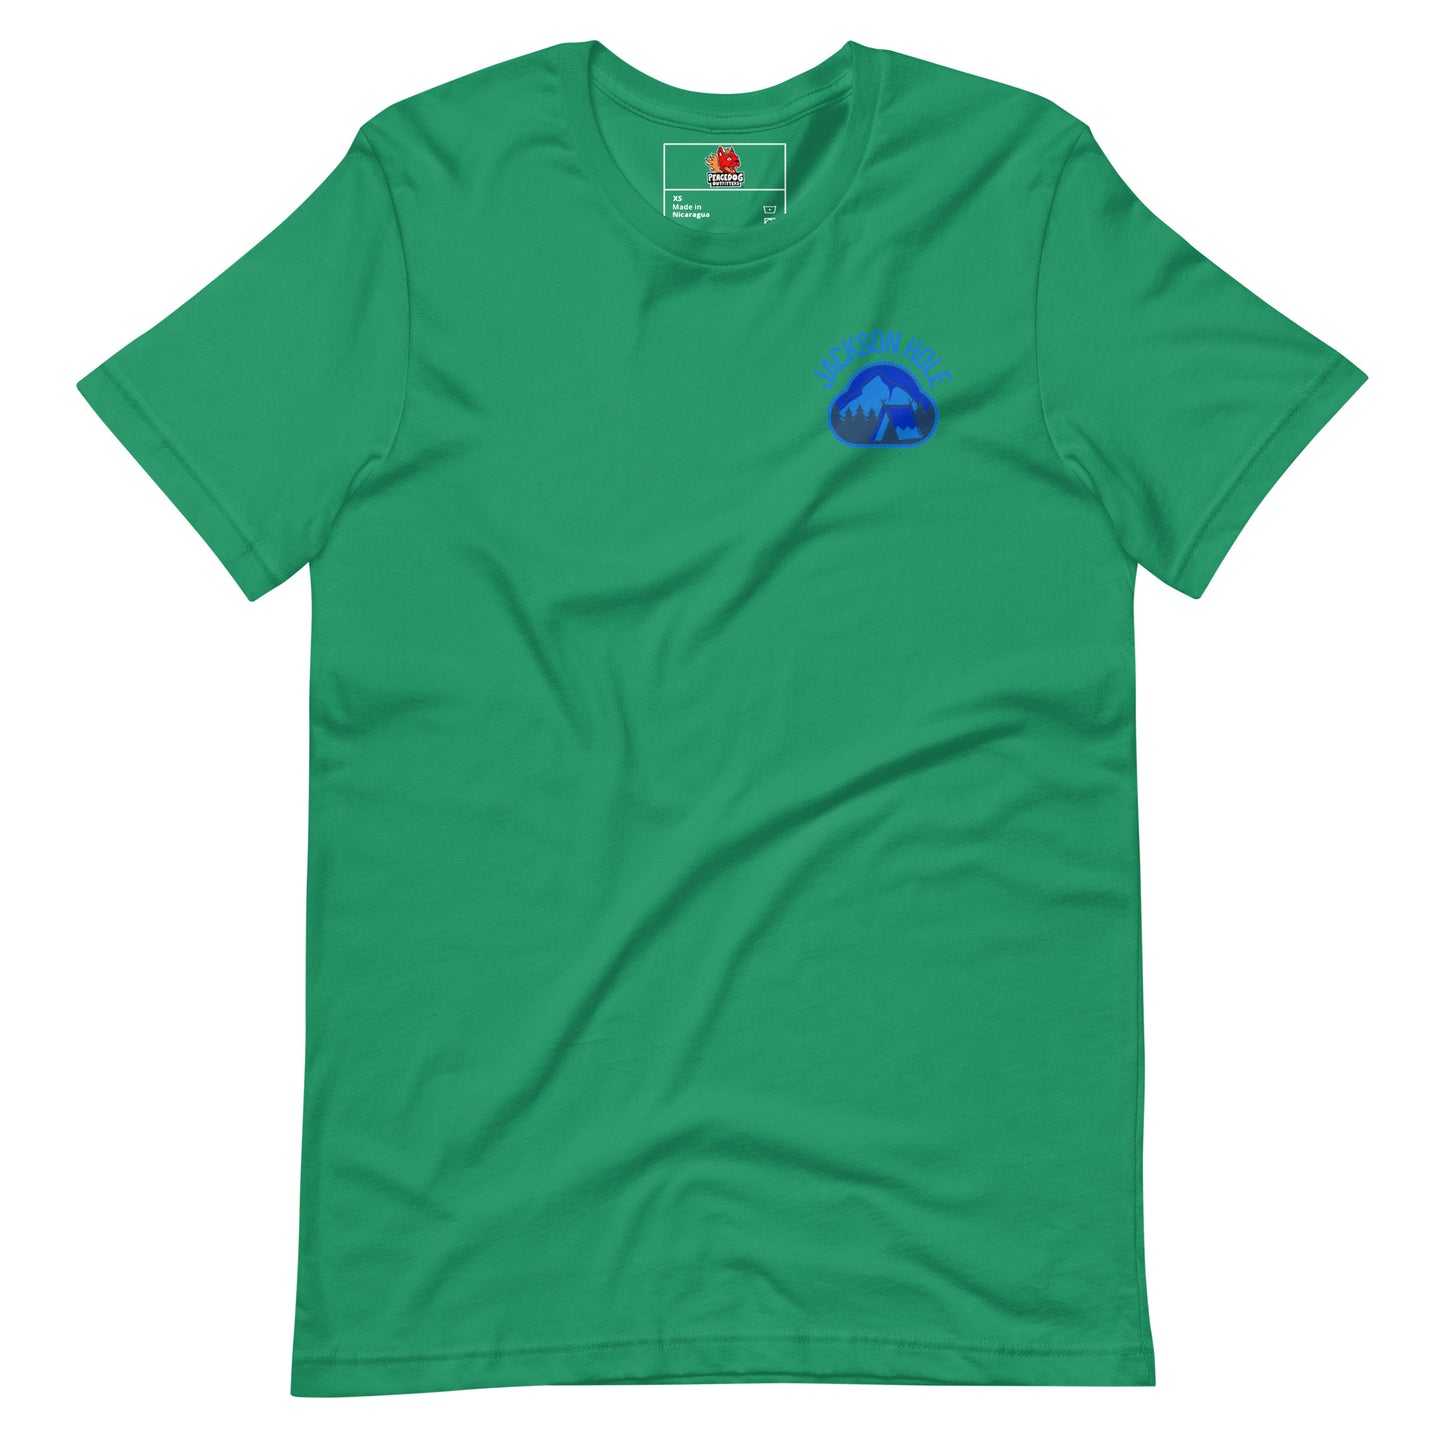 Explore Jackson Hole T-shirt